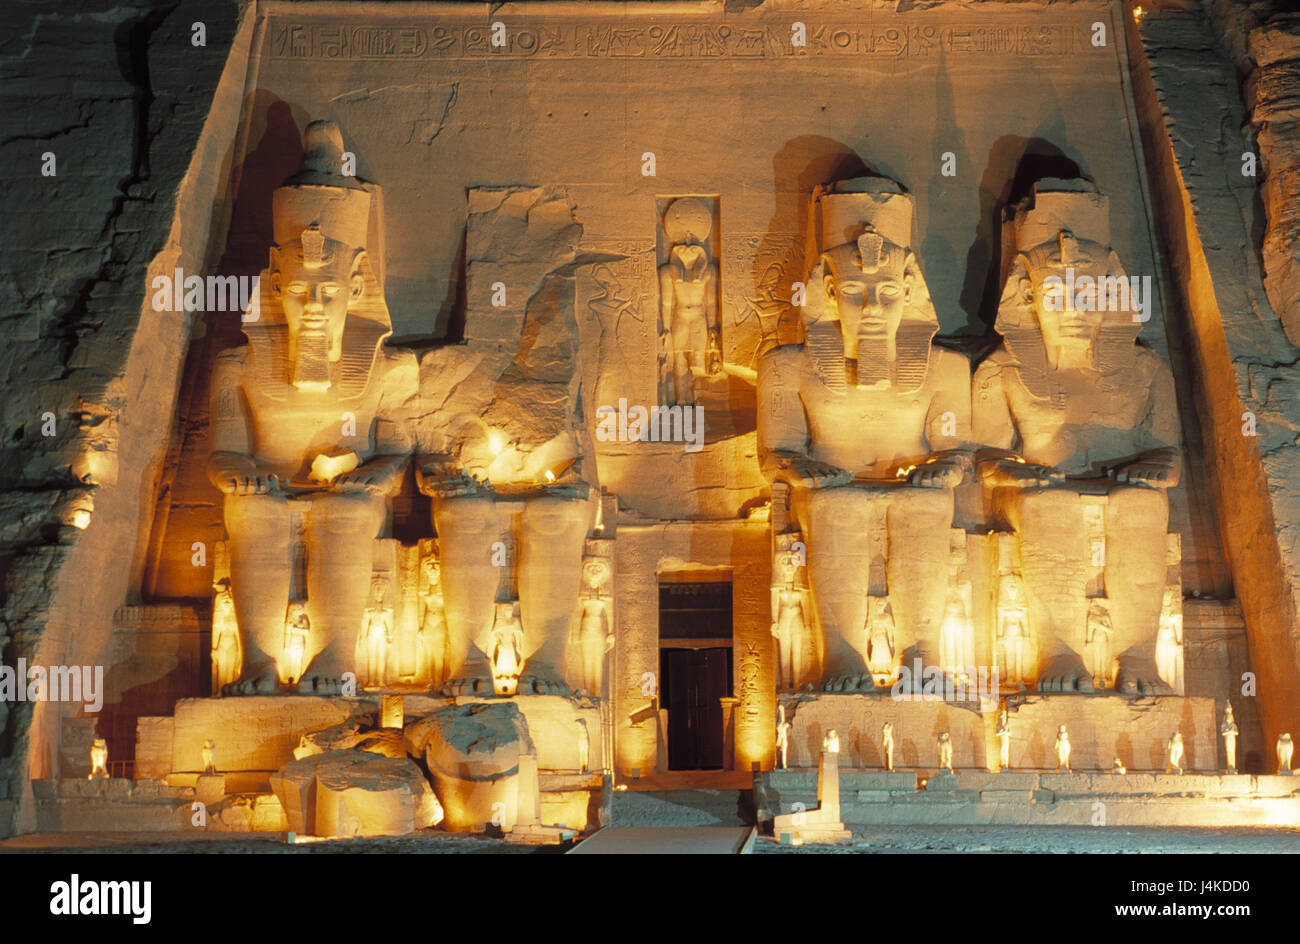 Egypt, Nubia, temple of Abu Simbel, input, illuminateds outside, Africa, East, portal, statues, giant statues, king Ramses II, place of interest, UNESCO-world cultural heritage, dusk, evening light, evening, lighting, Illumination, illuminated Stock Photo